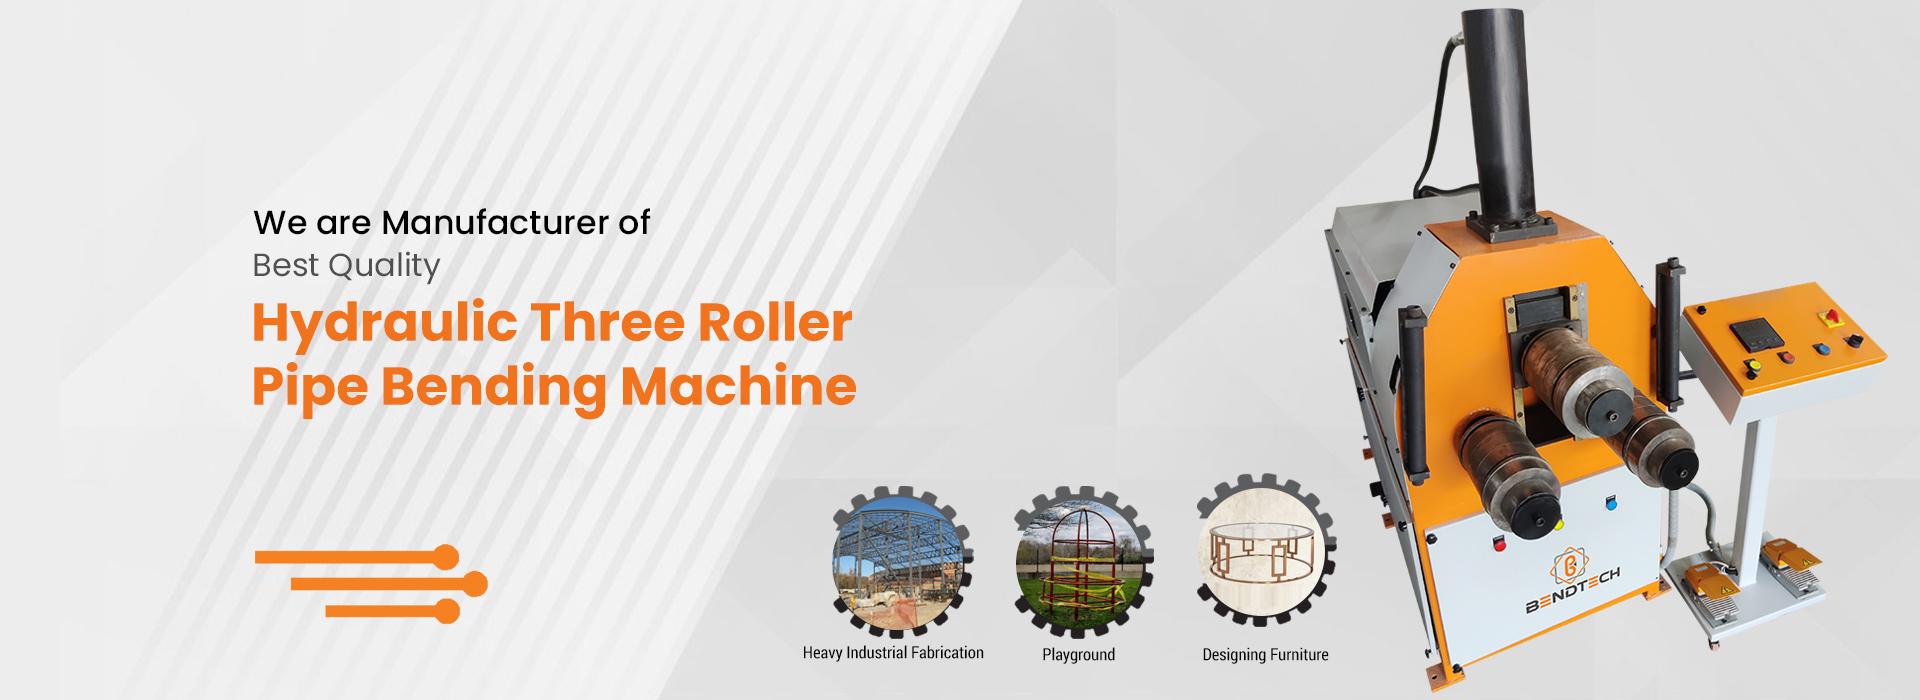 Hydraulic Three Roller Pipe Bending Machine Manufacturer